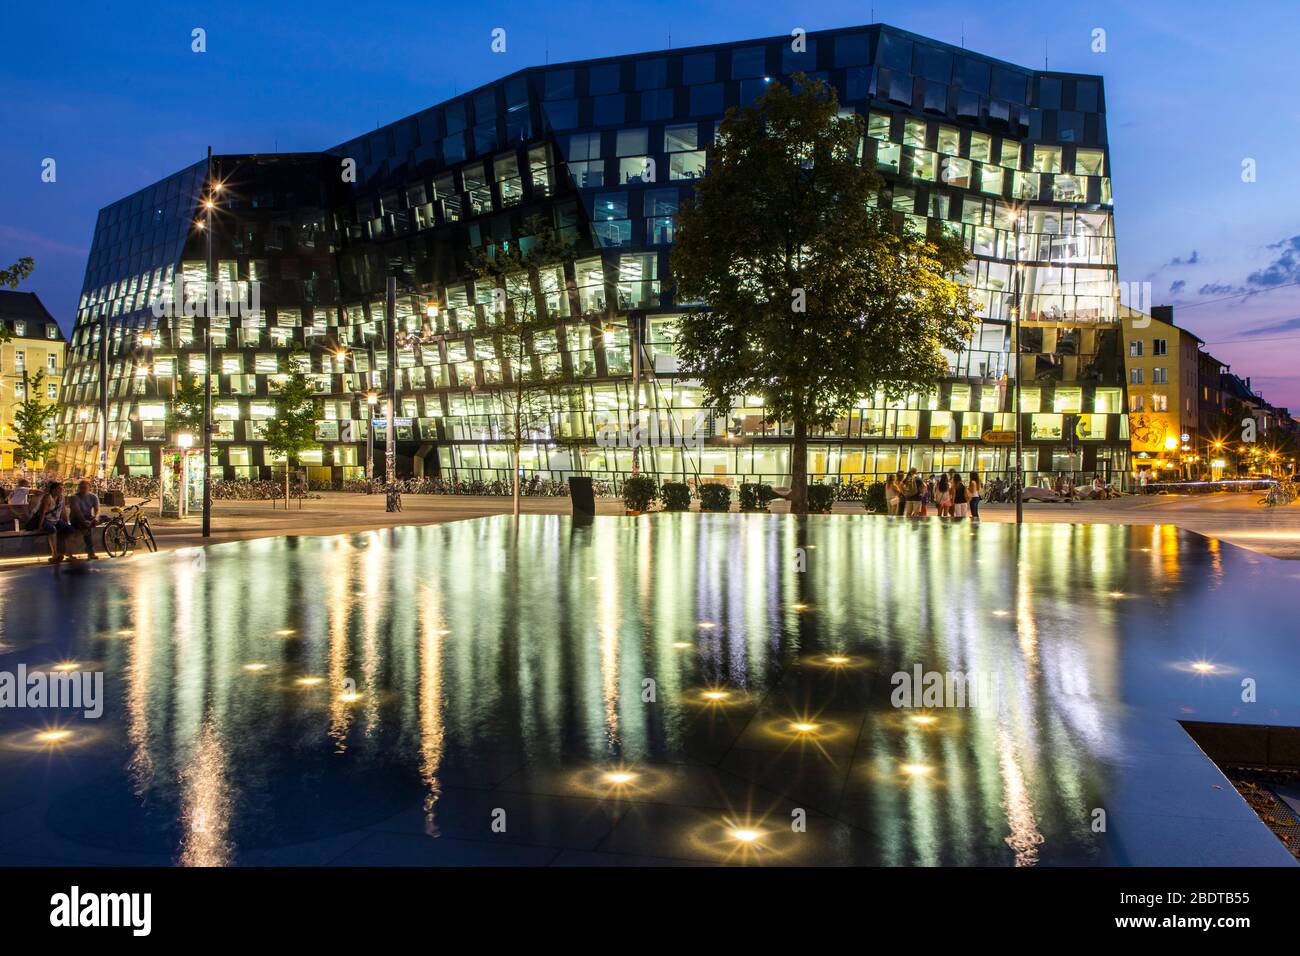 University Library Freiburg, new building, at the Platz der UniversitŠt, Freiburg im Breisgau, Germany, Stock Photo